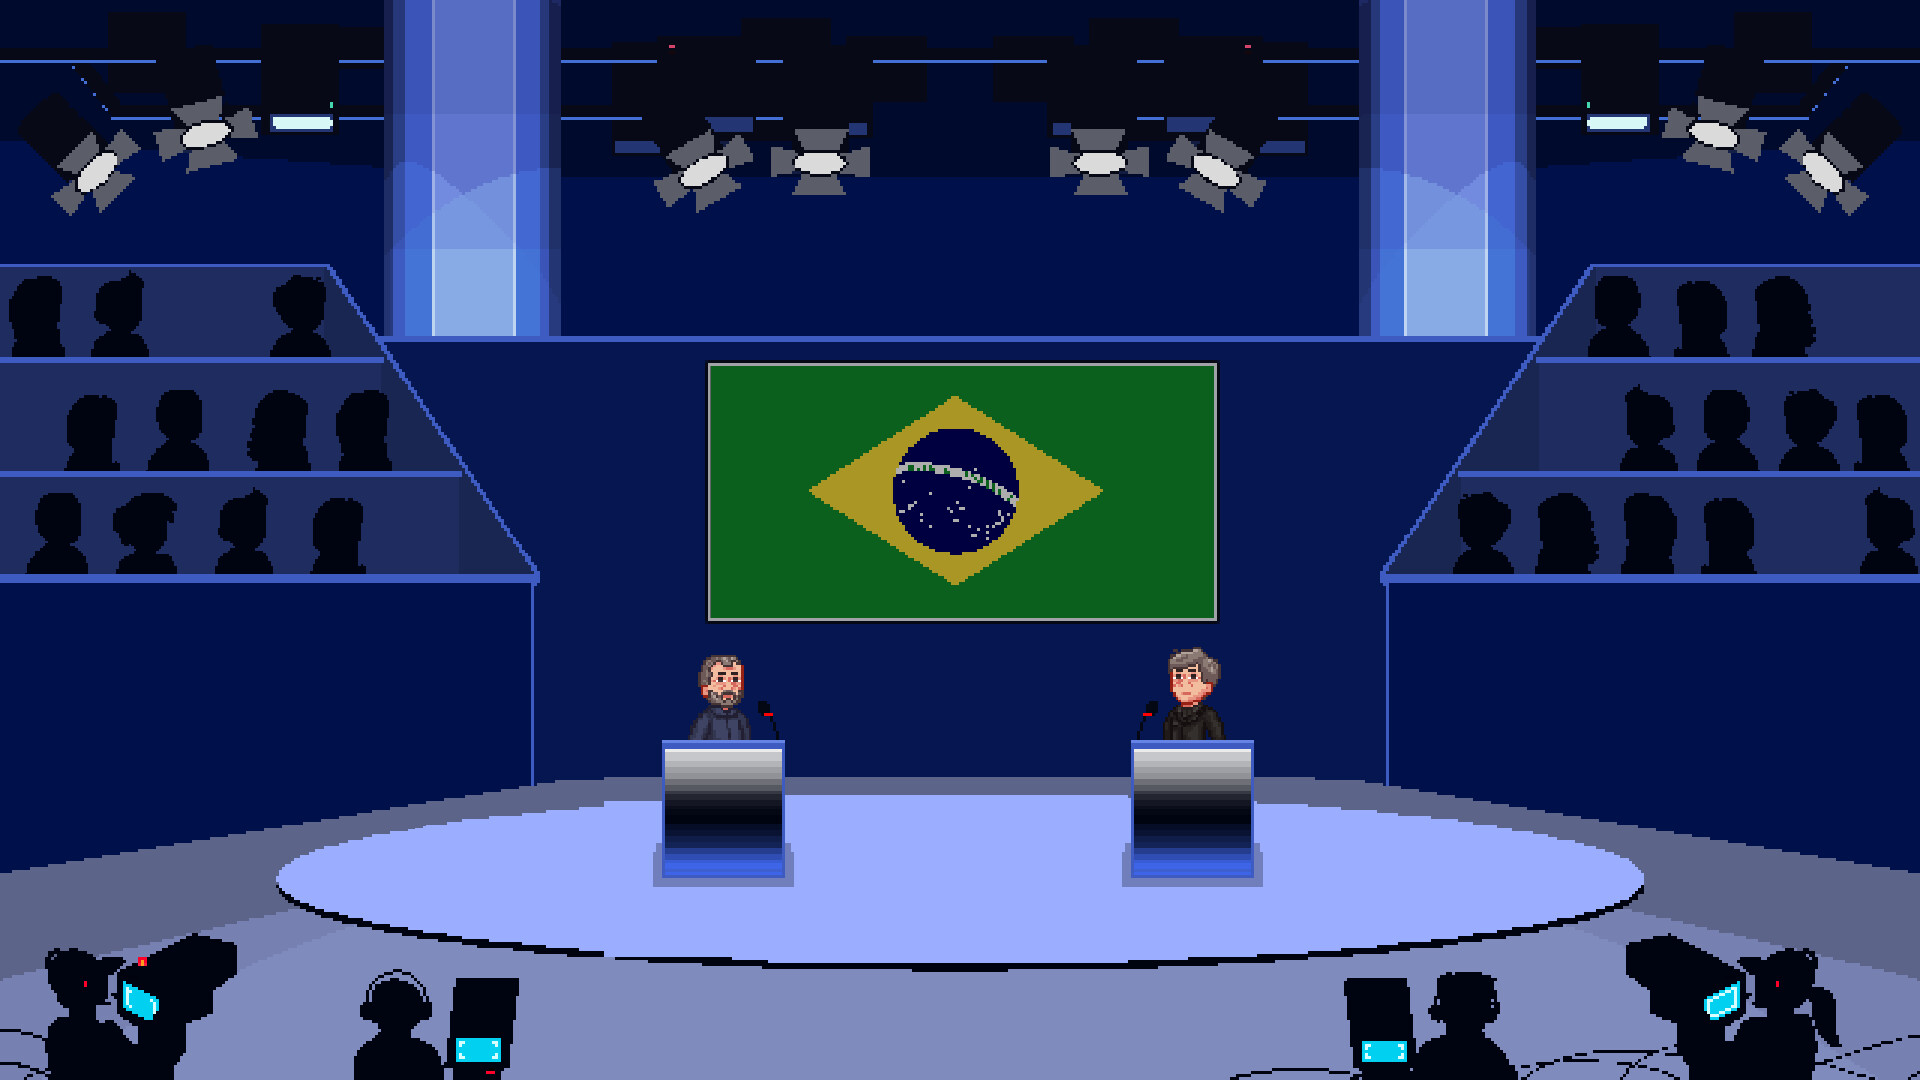 Vox Populi: Brasil 2022 no Steam